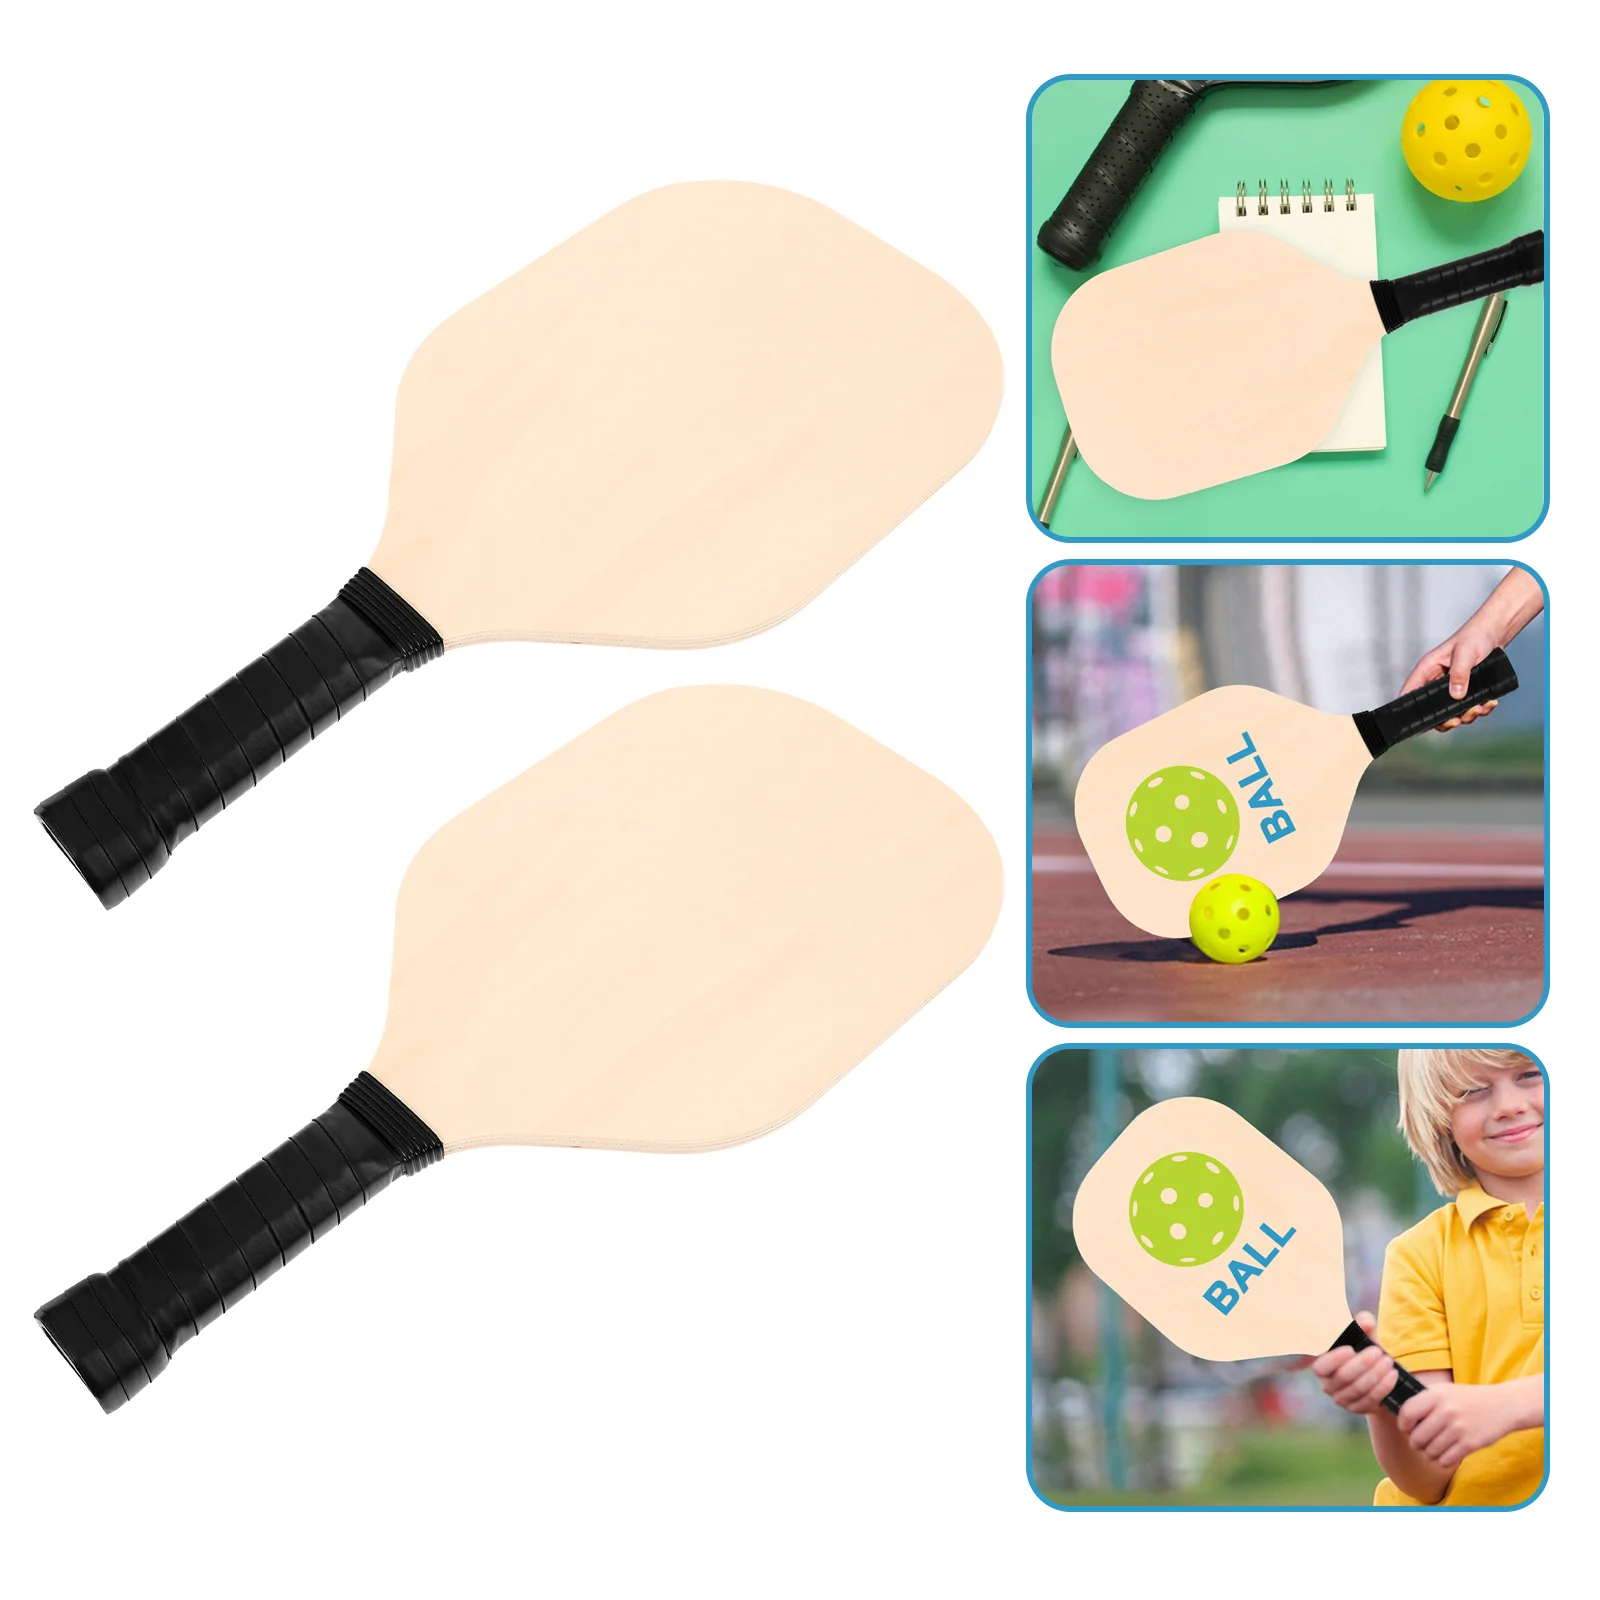 

2 Pcs Toys Professional Hole Ball Rackets Anti-slip Grip Balls Sports Supplies Outdoor Kit Playing Paddles